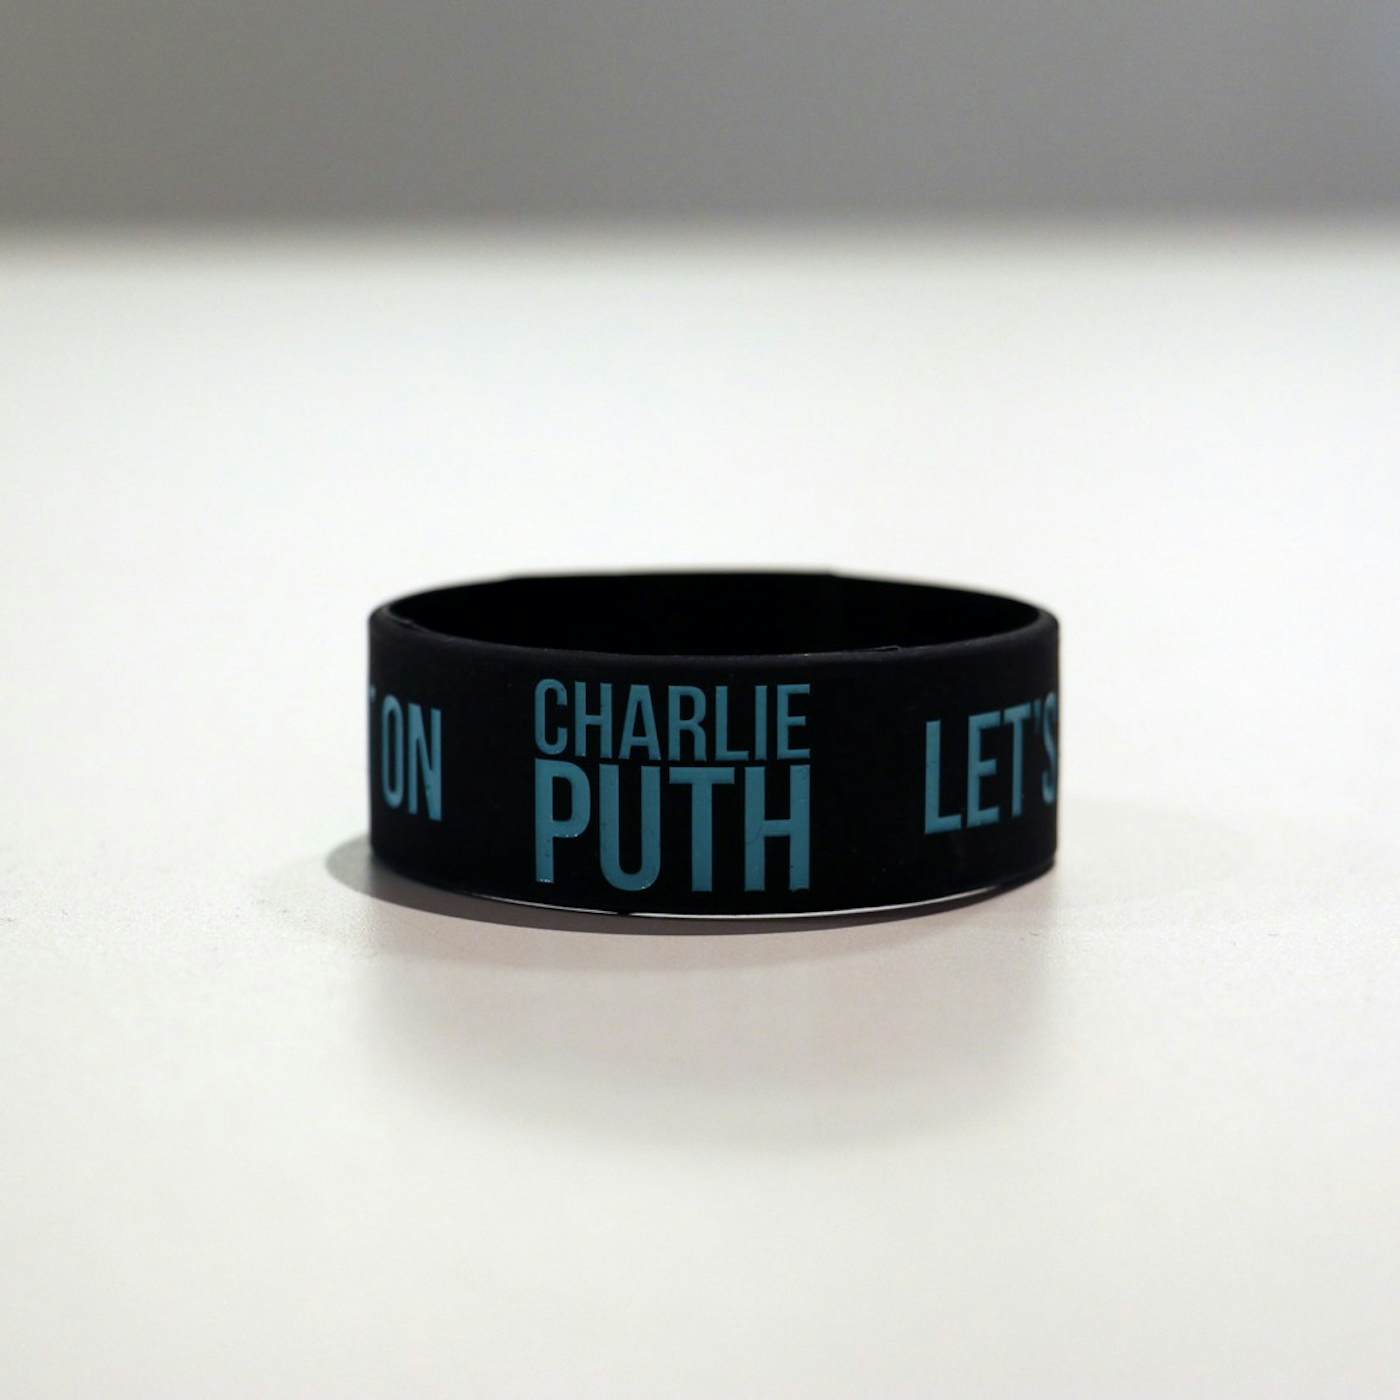 Charlie Puth "Marvin Gaye" Wristband